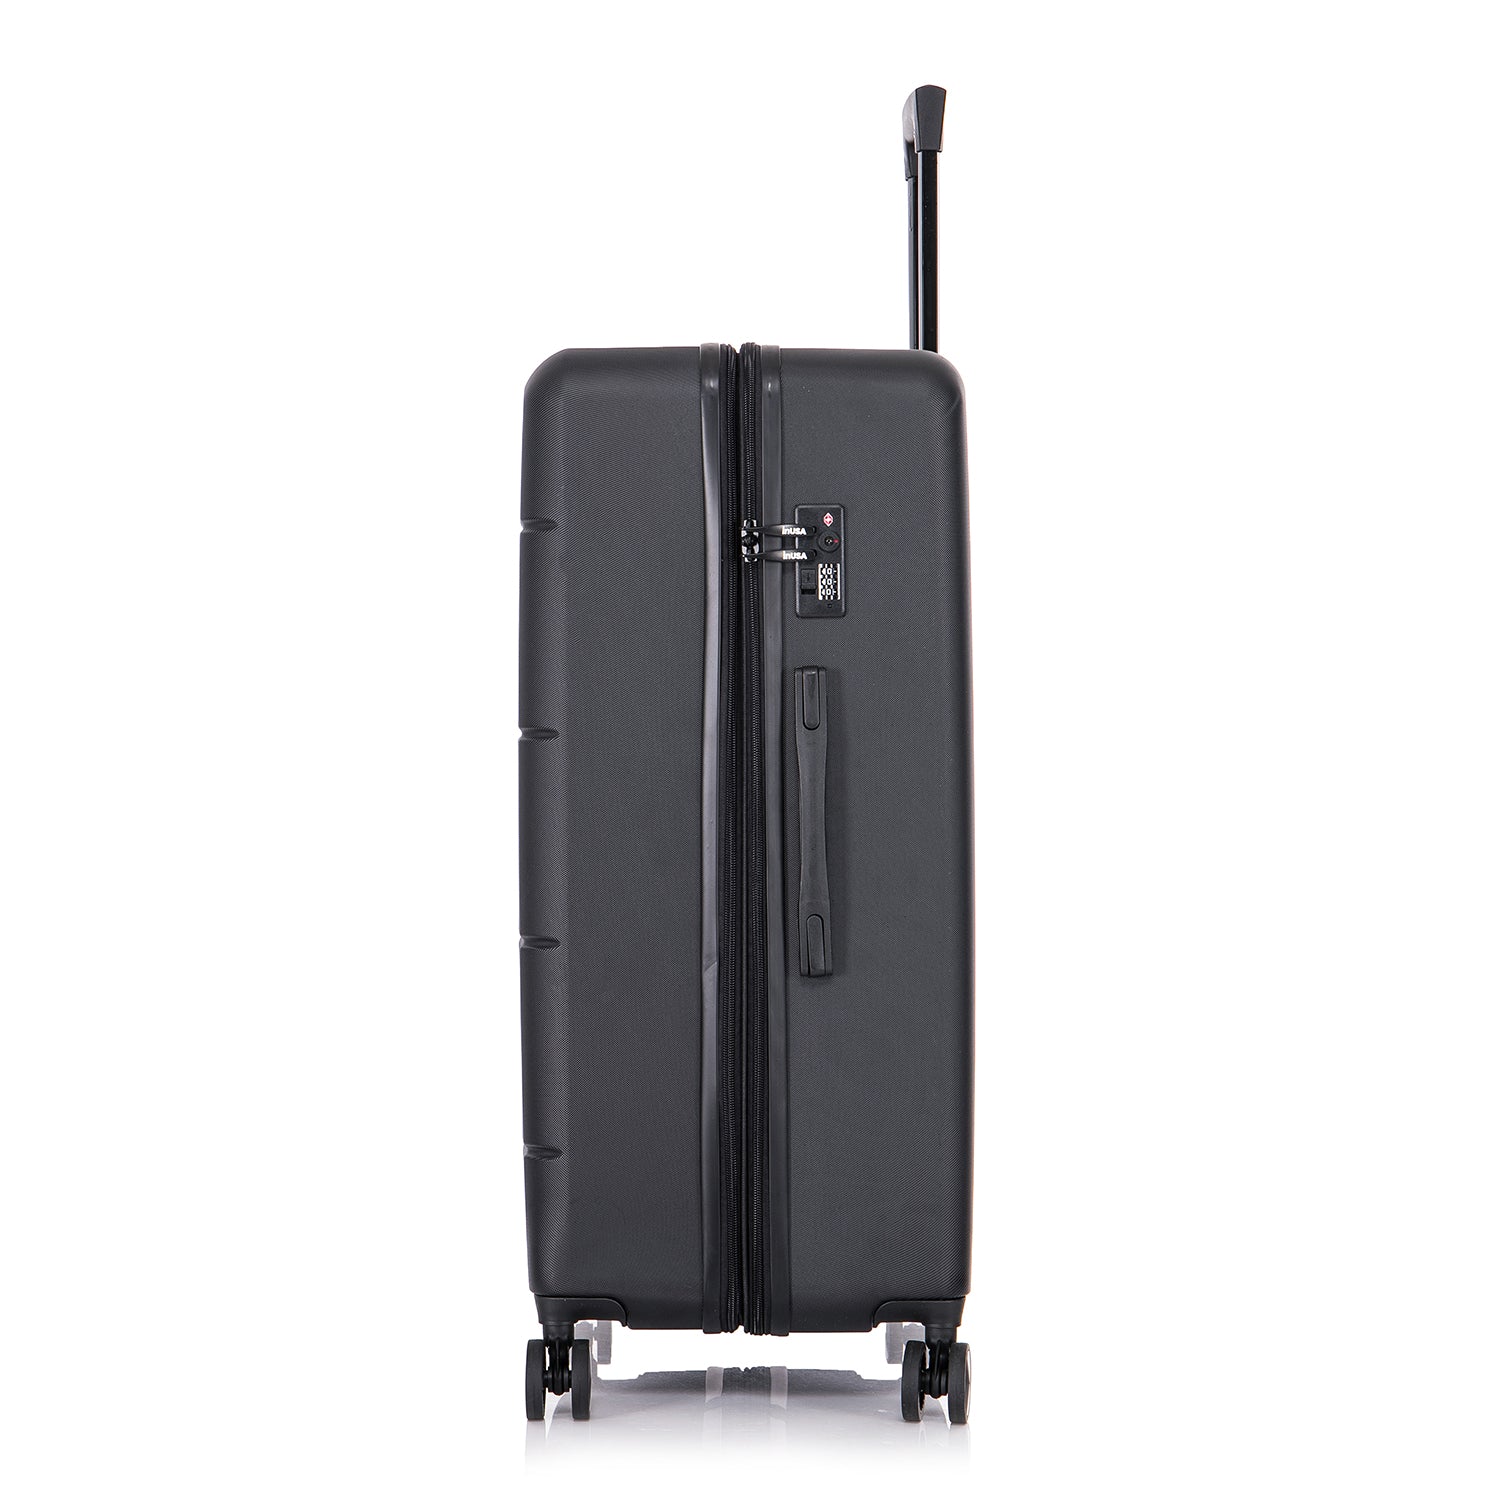 InUSA Elysian Lightweight Hardside Spinner 3 piece luggage set  20'',24'', 28'' inch Black